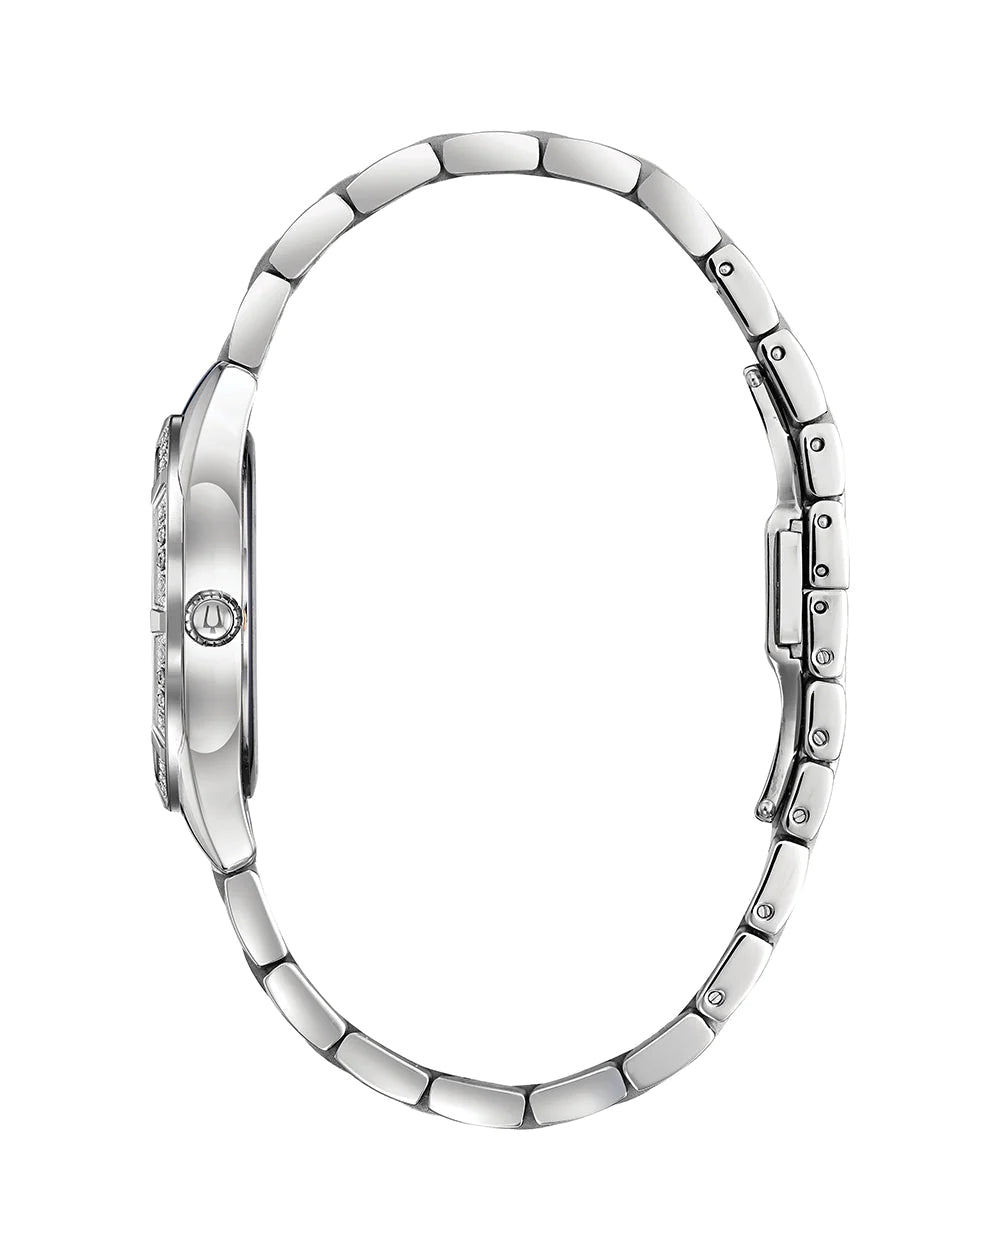 Bulova Women's Classic Diamond Watch 96R228